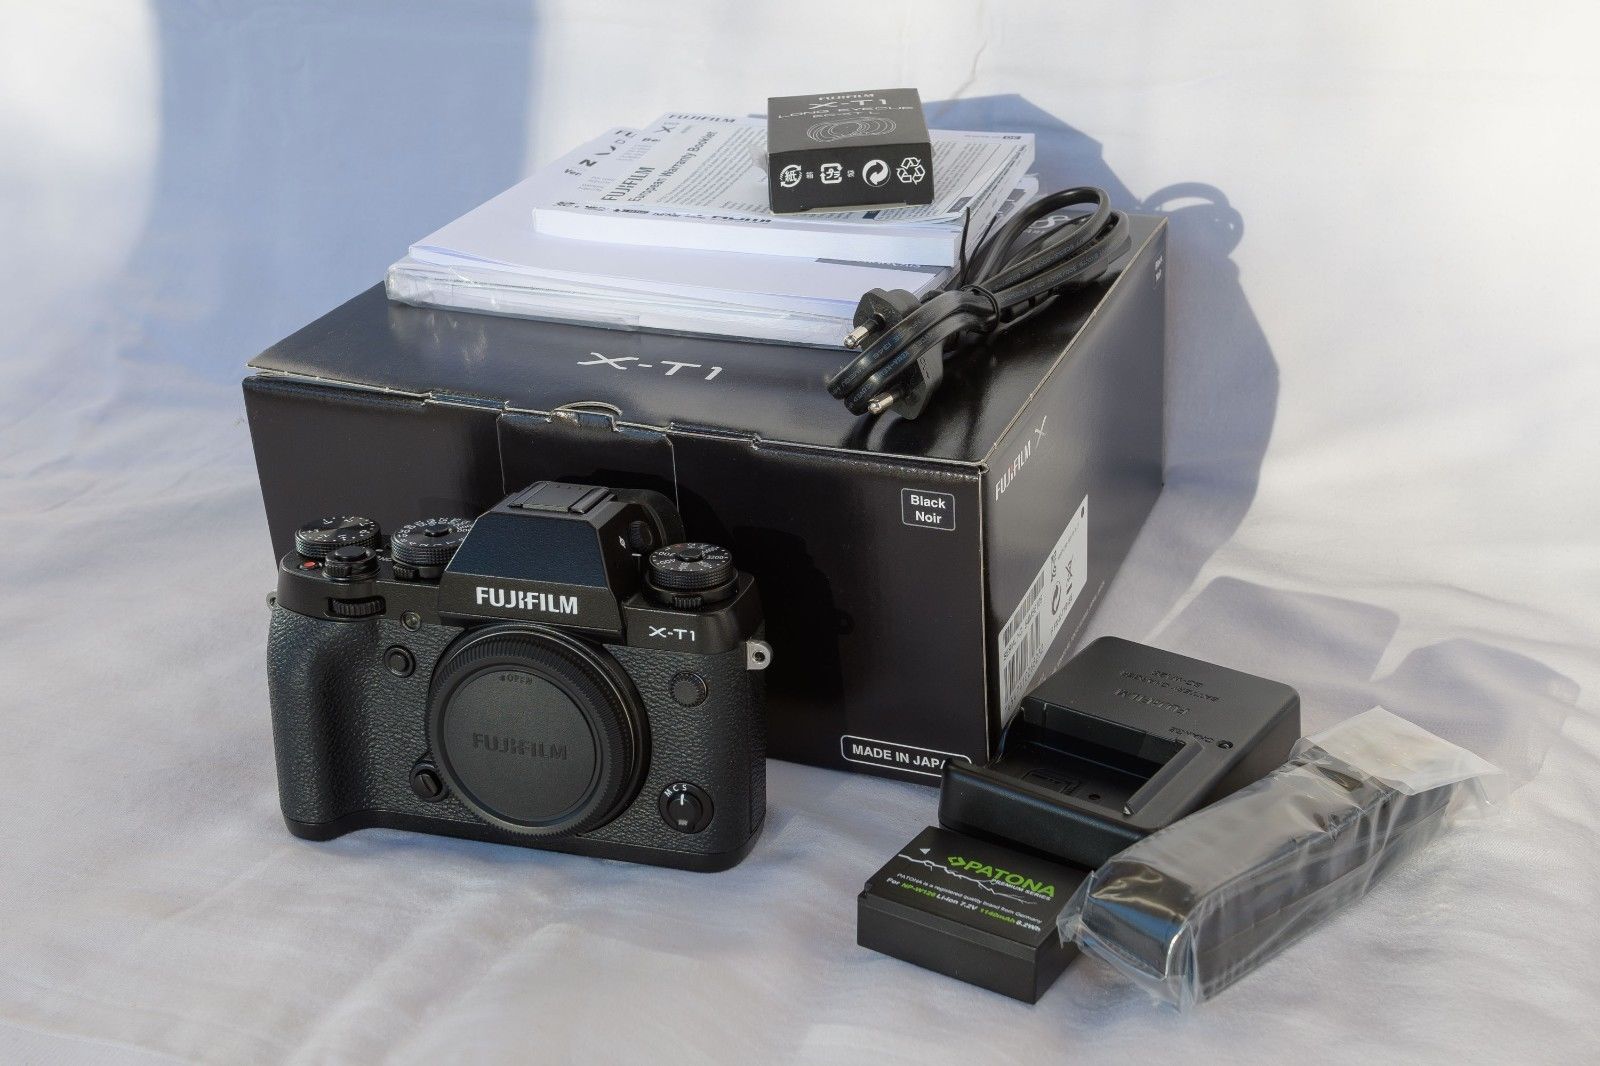 Fuji X-T1 Digitalkamera, 2 Monate alt, neuwertig, Restgarantie, OVP, Zubehör